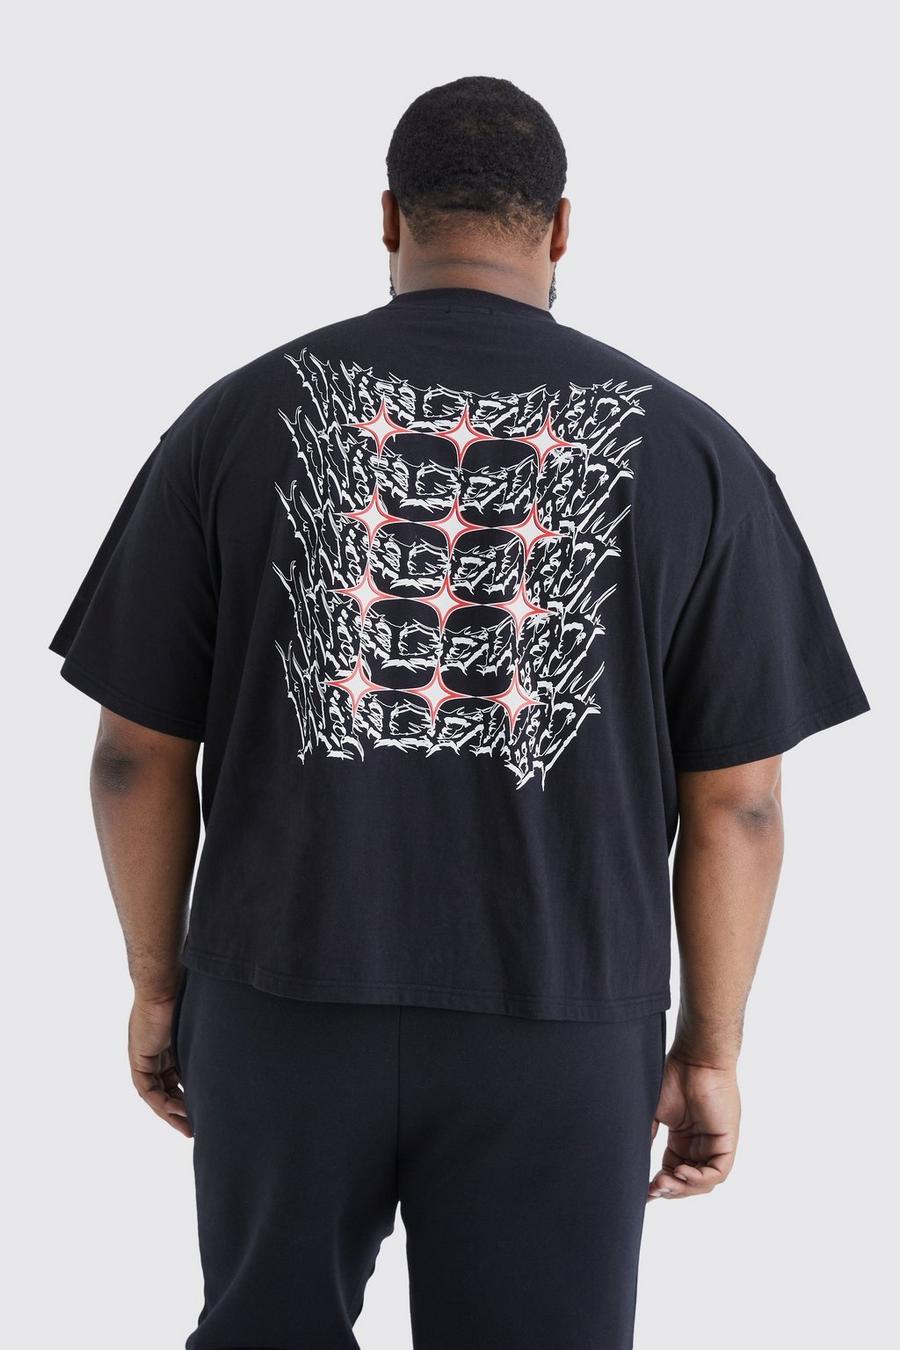 Plus kastiges Oversize T-Shirt mit Grunge Homme Print, Black noir